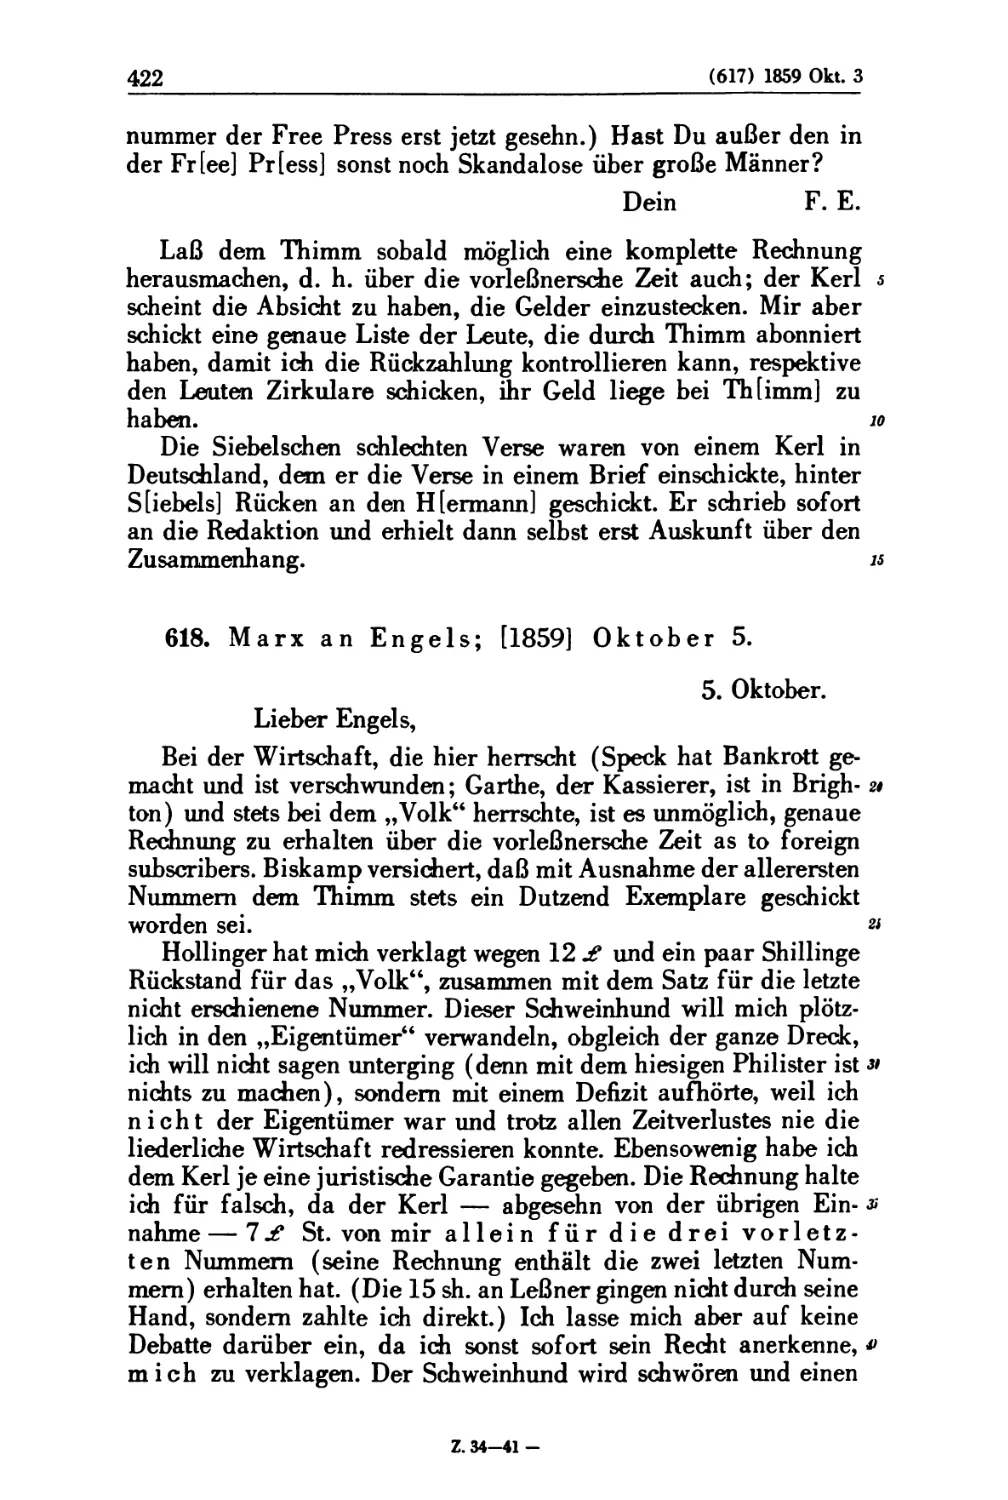 618. Marx an Engels; [1859] Oktober 5